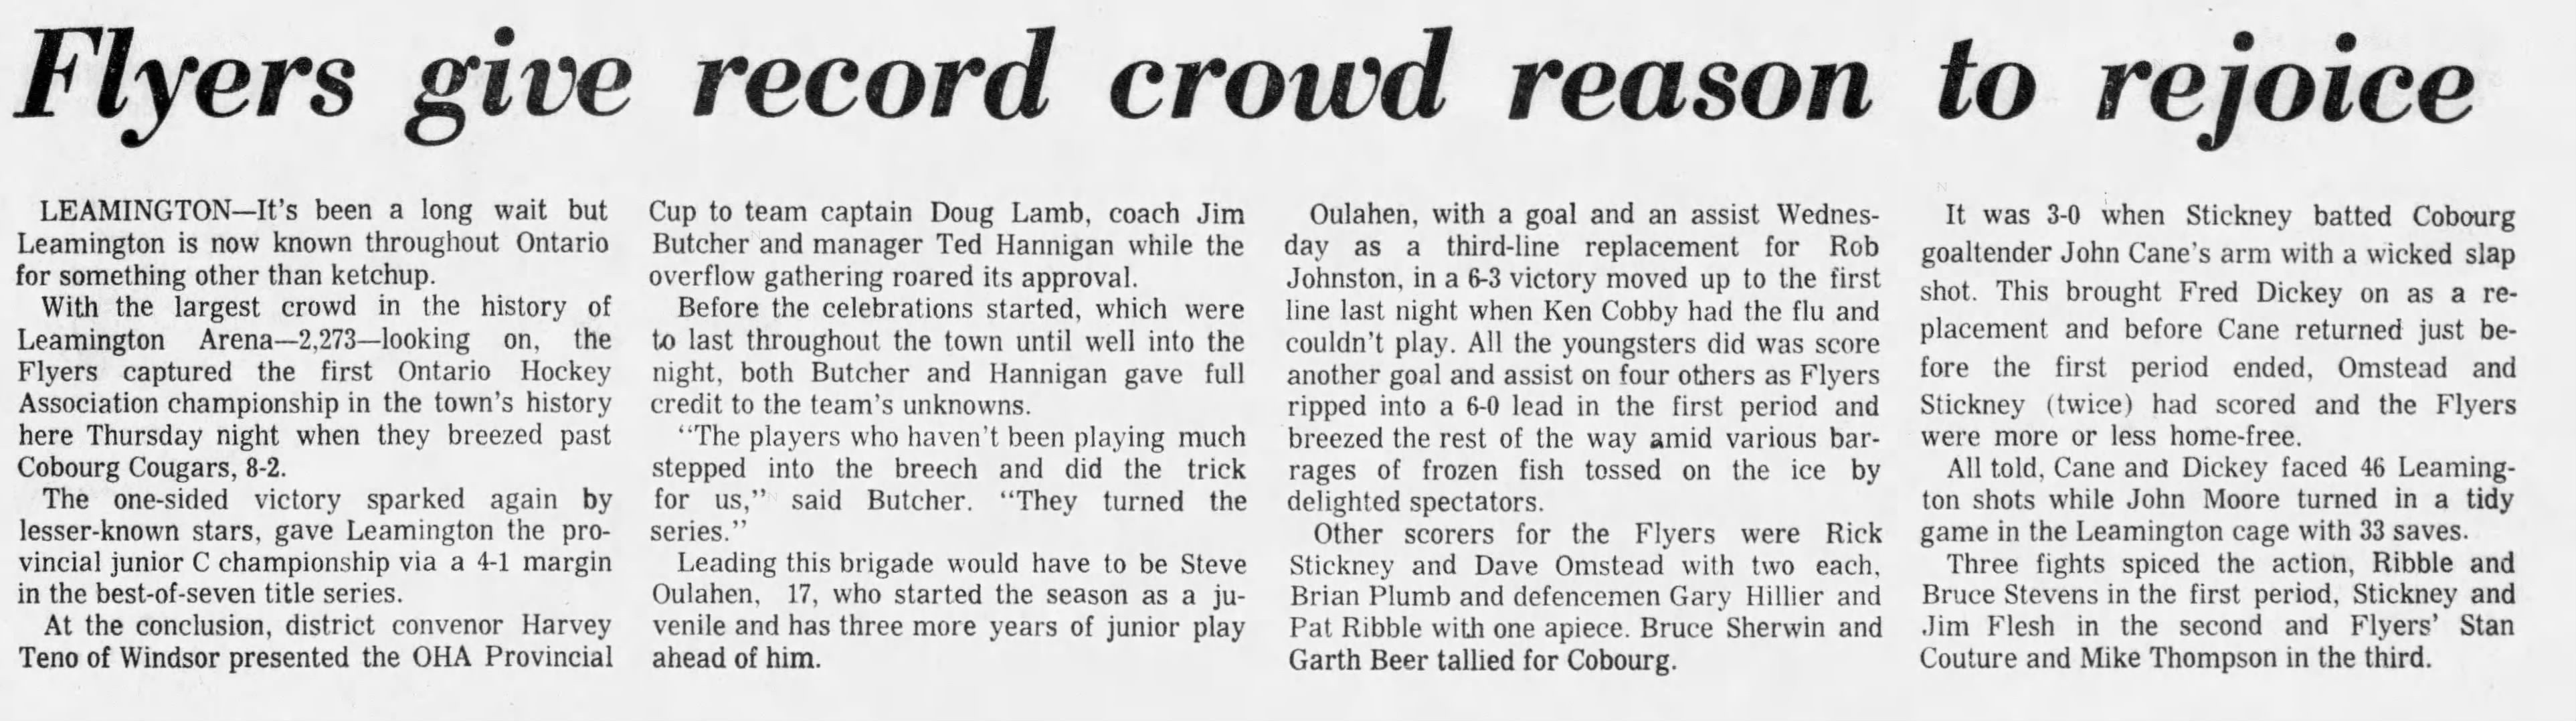 1972-04-21 Hockey -Cougars JrC Game5 loss to Leamingtom -Windsor Star